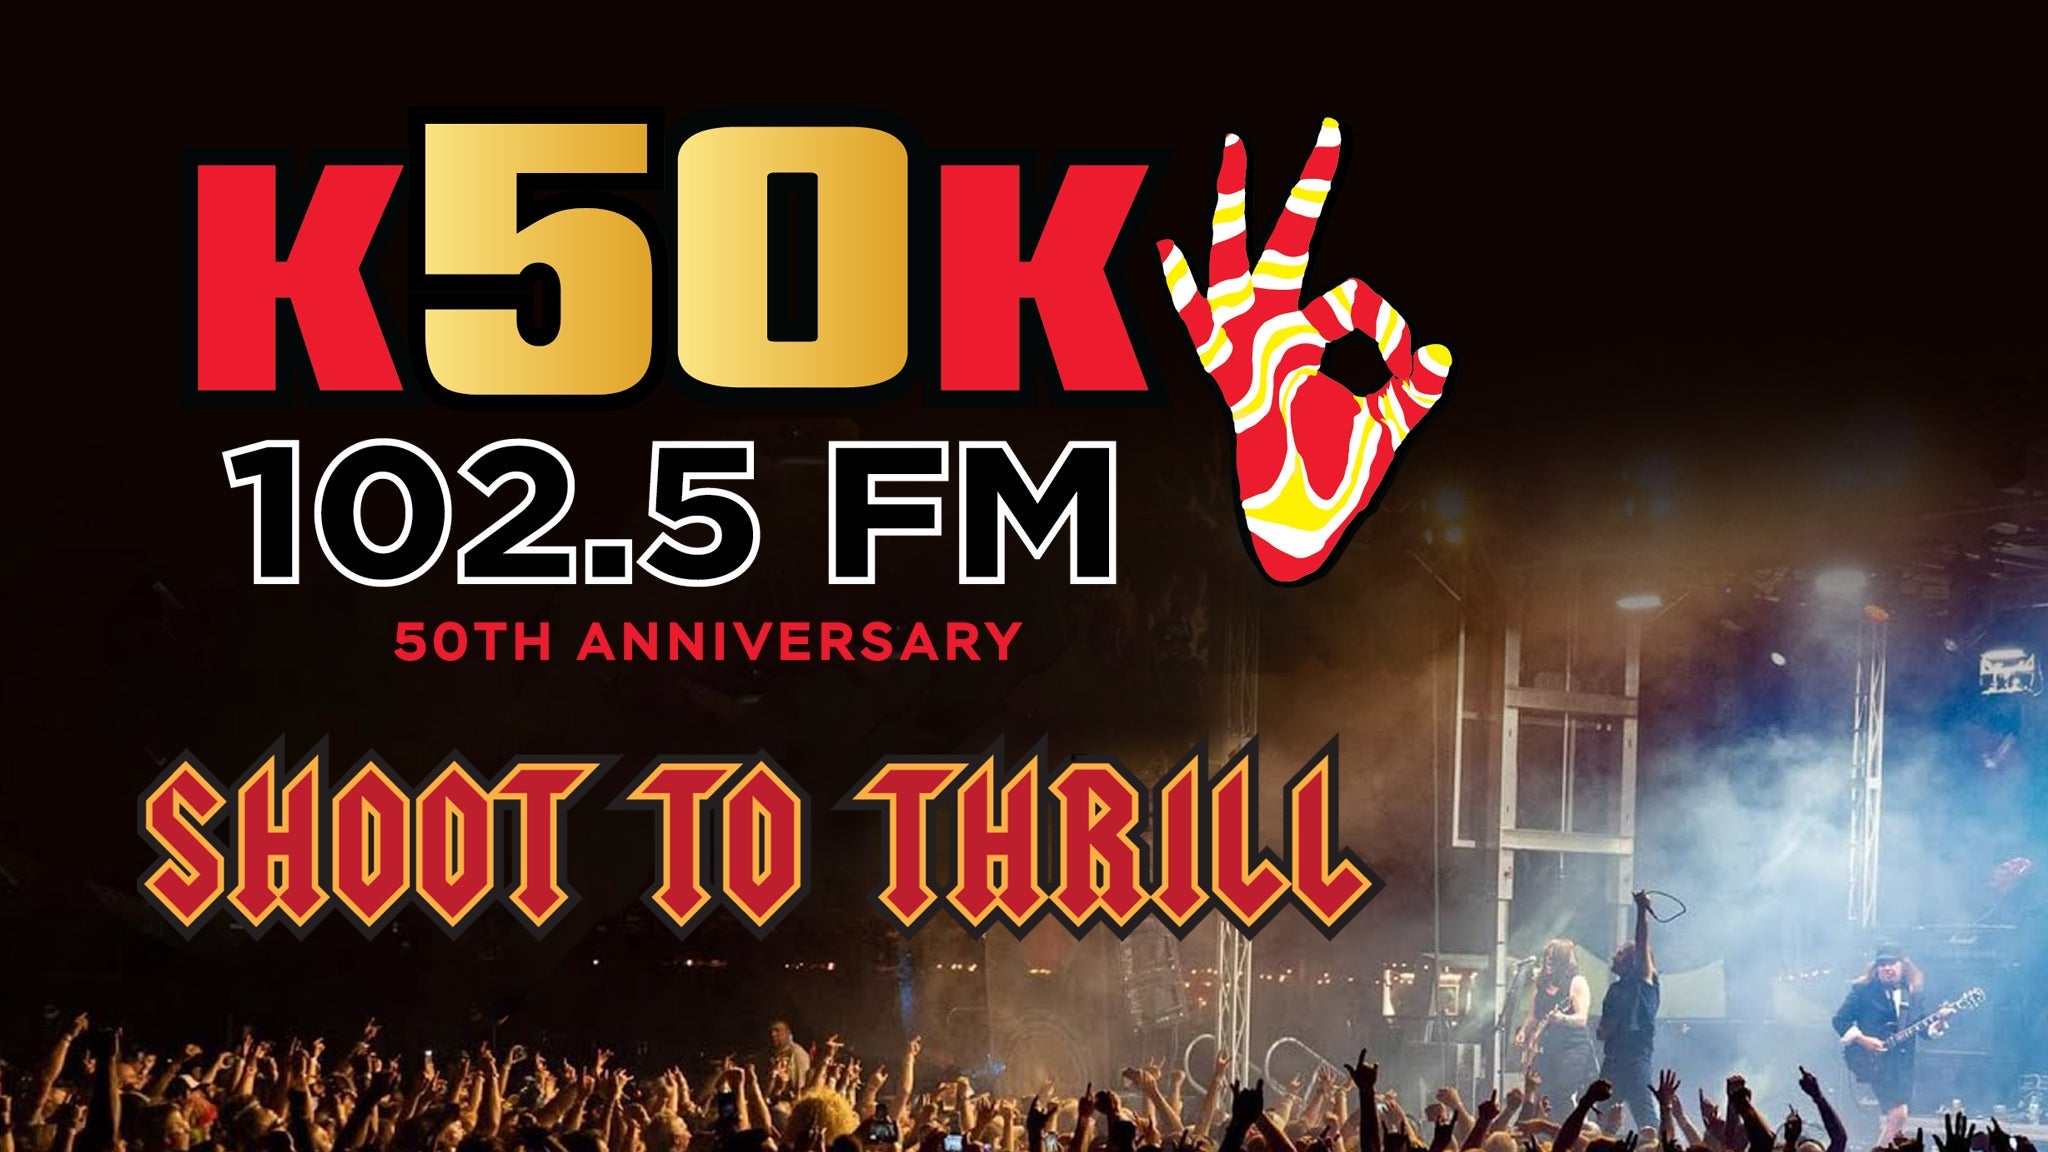 KZOK 102.5 FM 50th Anniversary ft. SHOOT TO THRILL